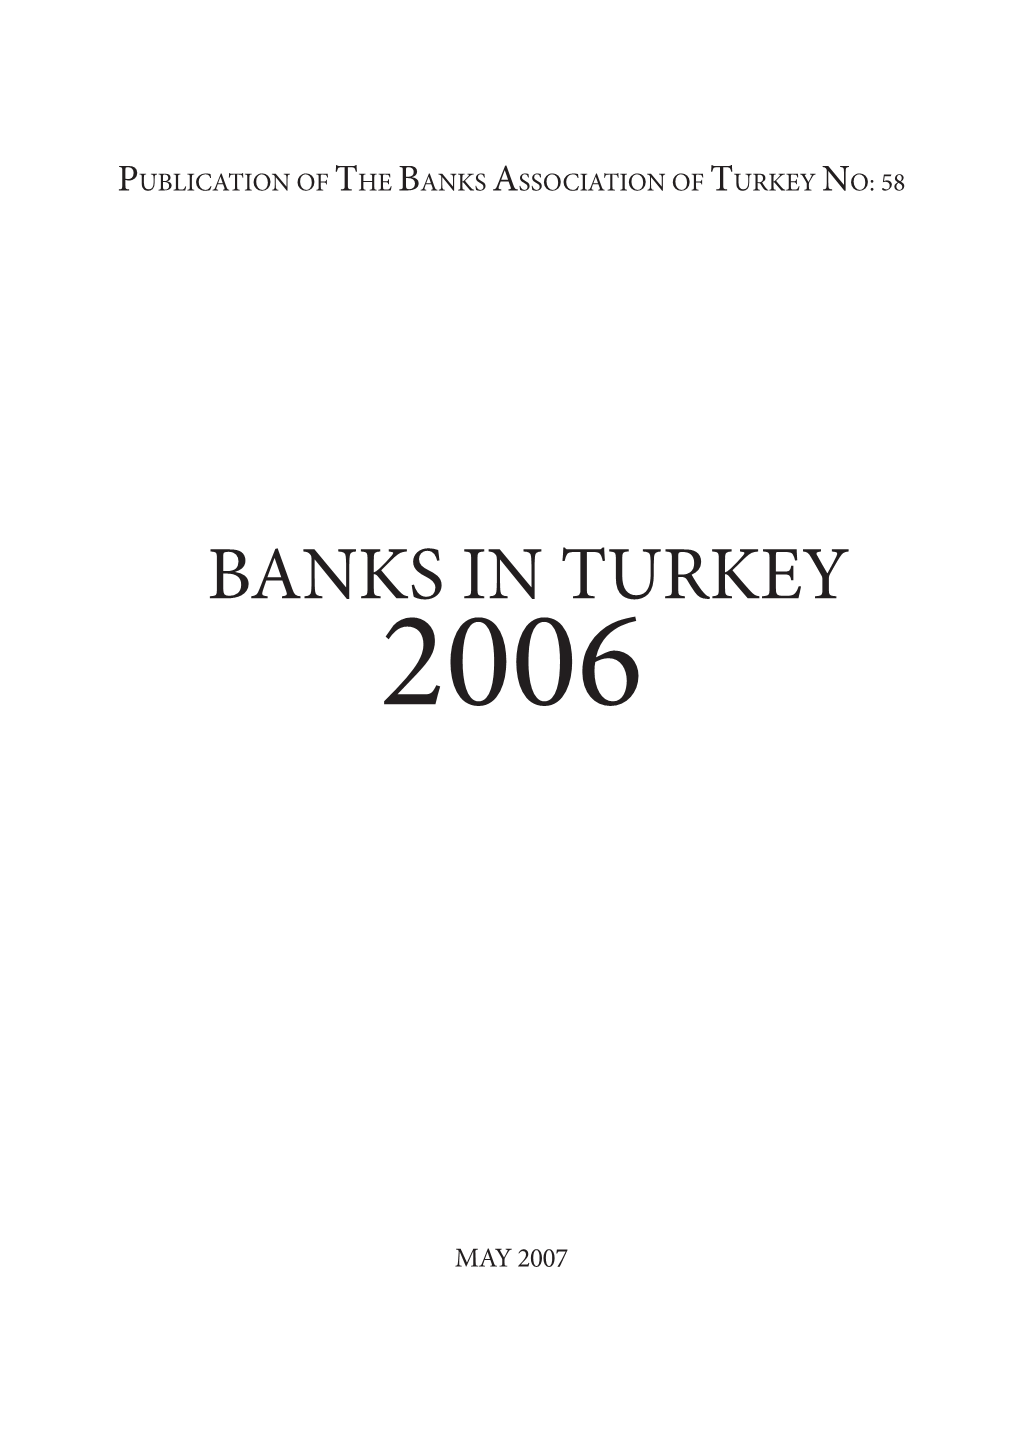 Banks in Turkey 2006